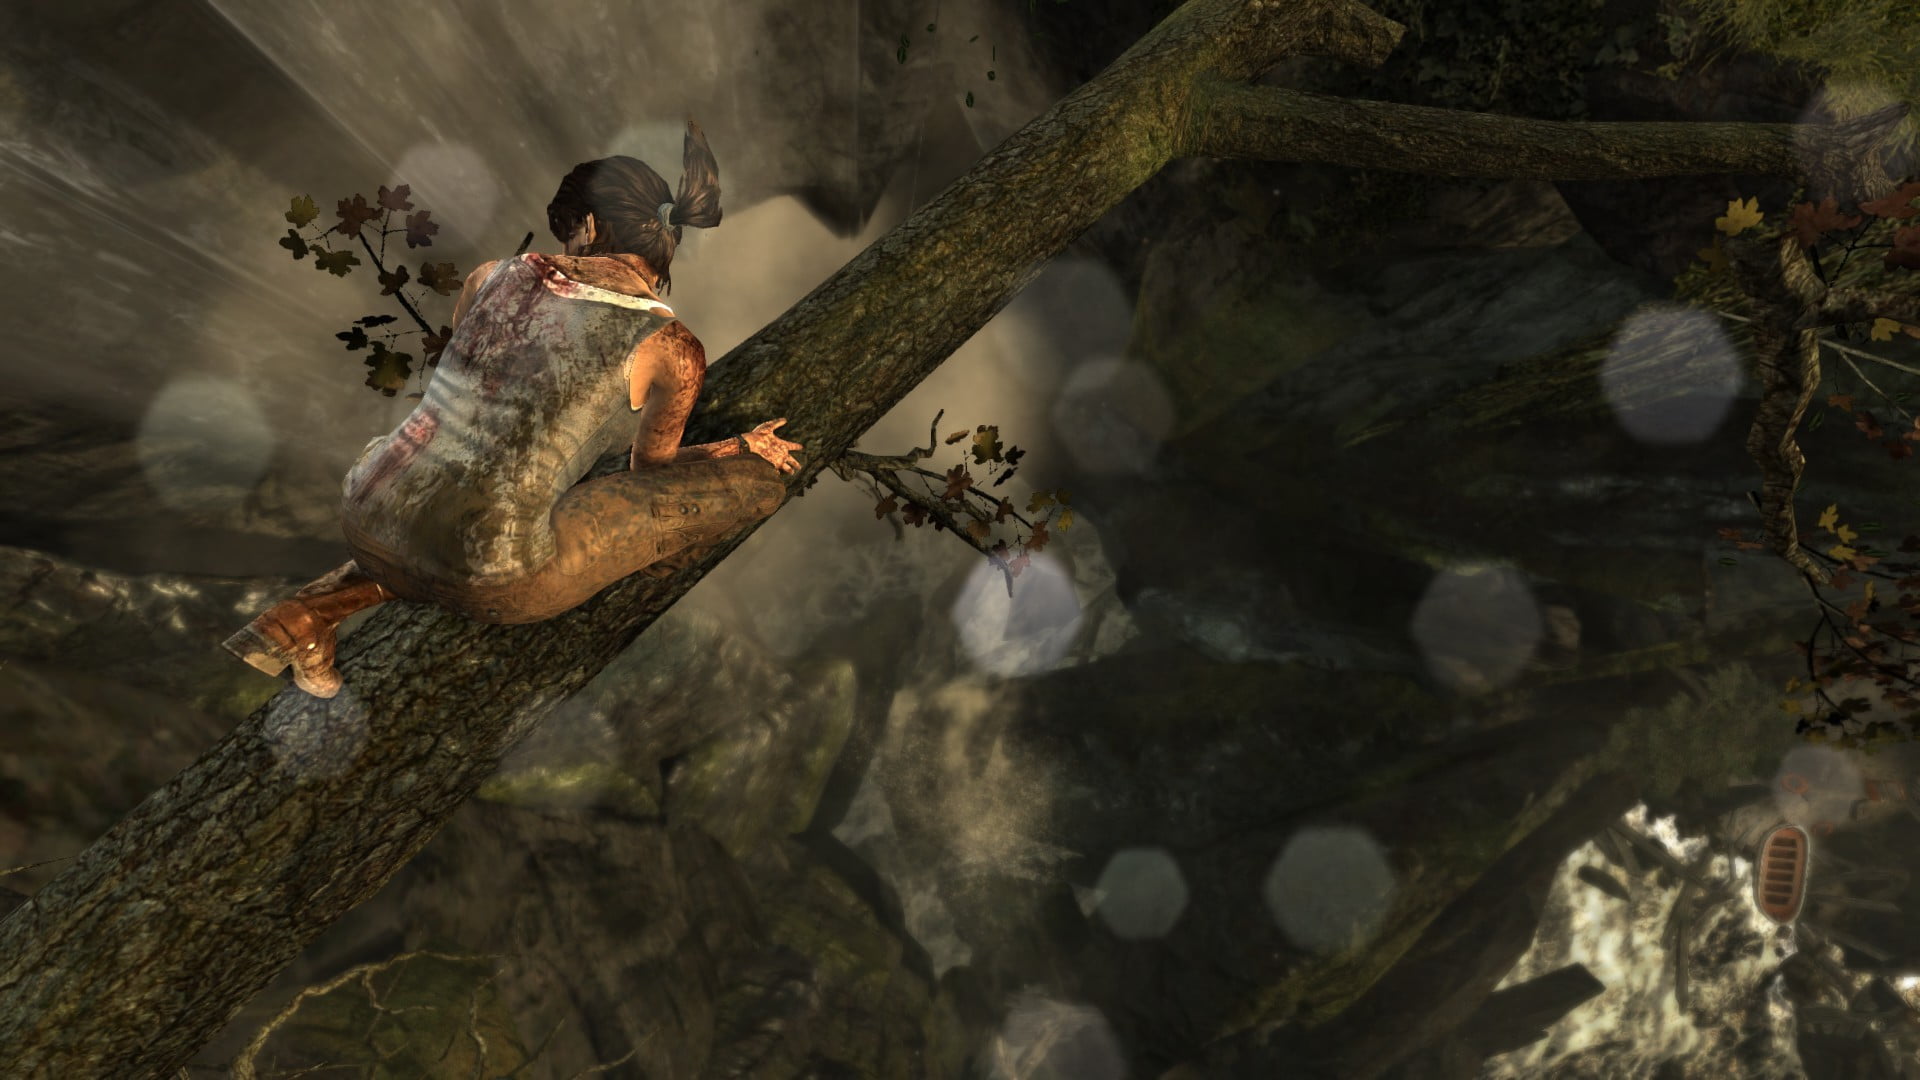 game application screenshot, Tomb Raider, video games, Lara Croft